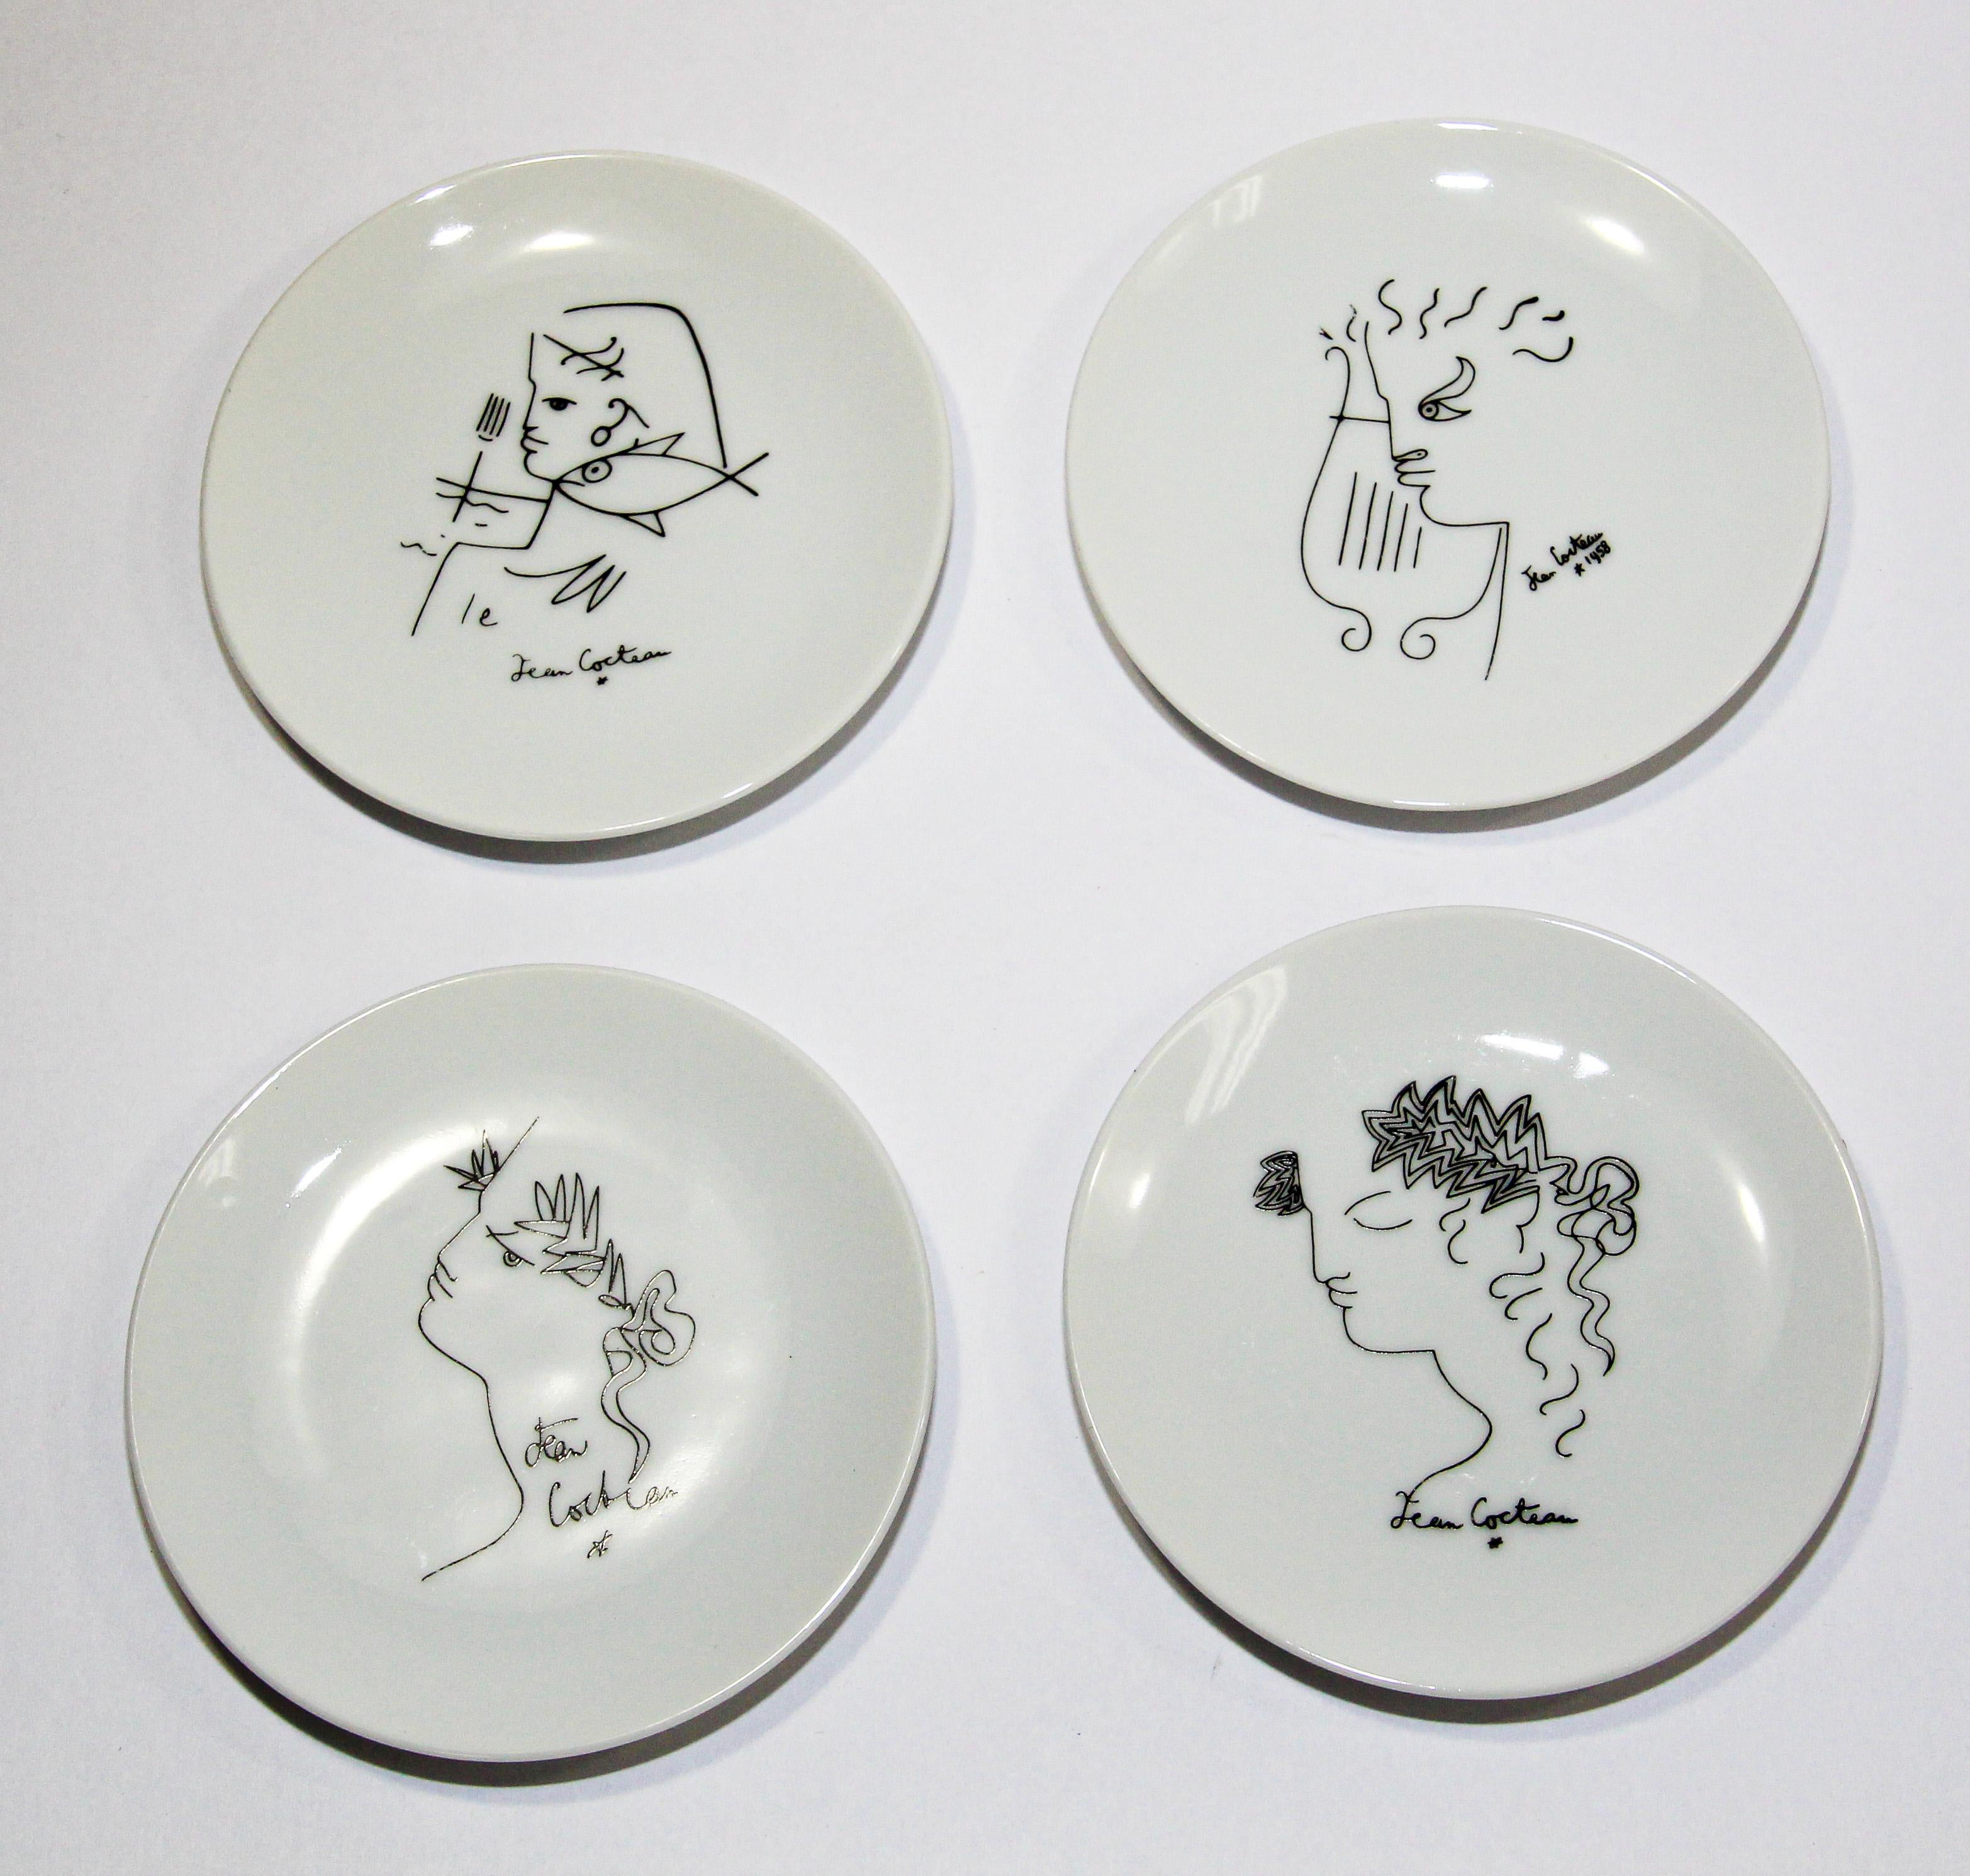 1950's Jean Cocteau Orpheus small decorative collectible plate.
Set of 4 Jean Cocteau Limoges France Art Porcelain China decorative plates.
Made in France.
After the drawings of Jean Cocteau, Orpheus and his harp, Eurydice,
Orpheus was a